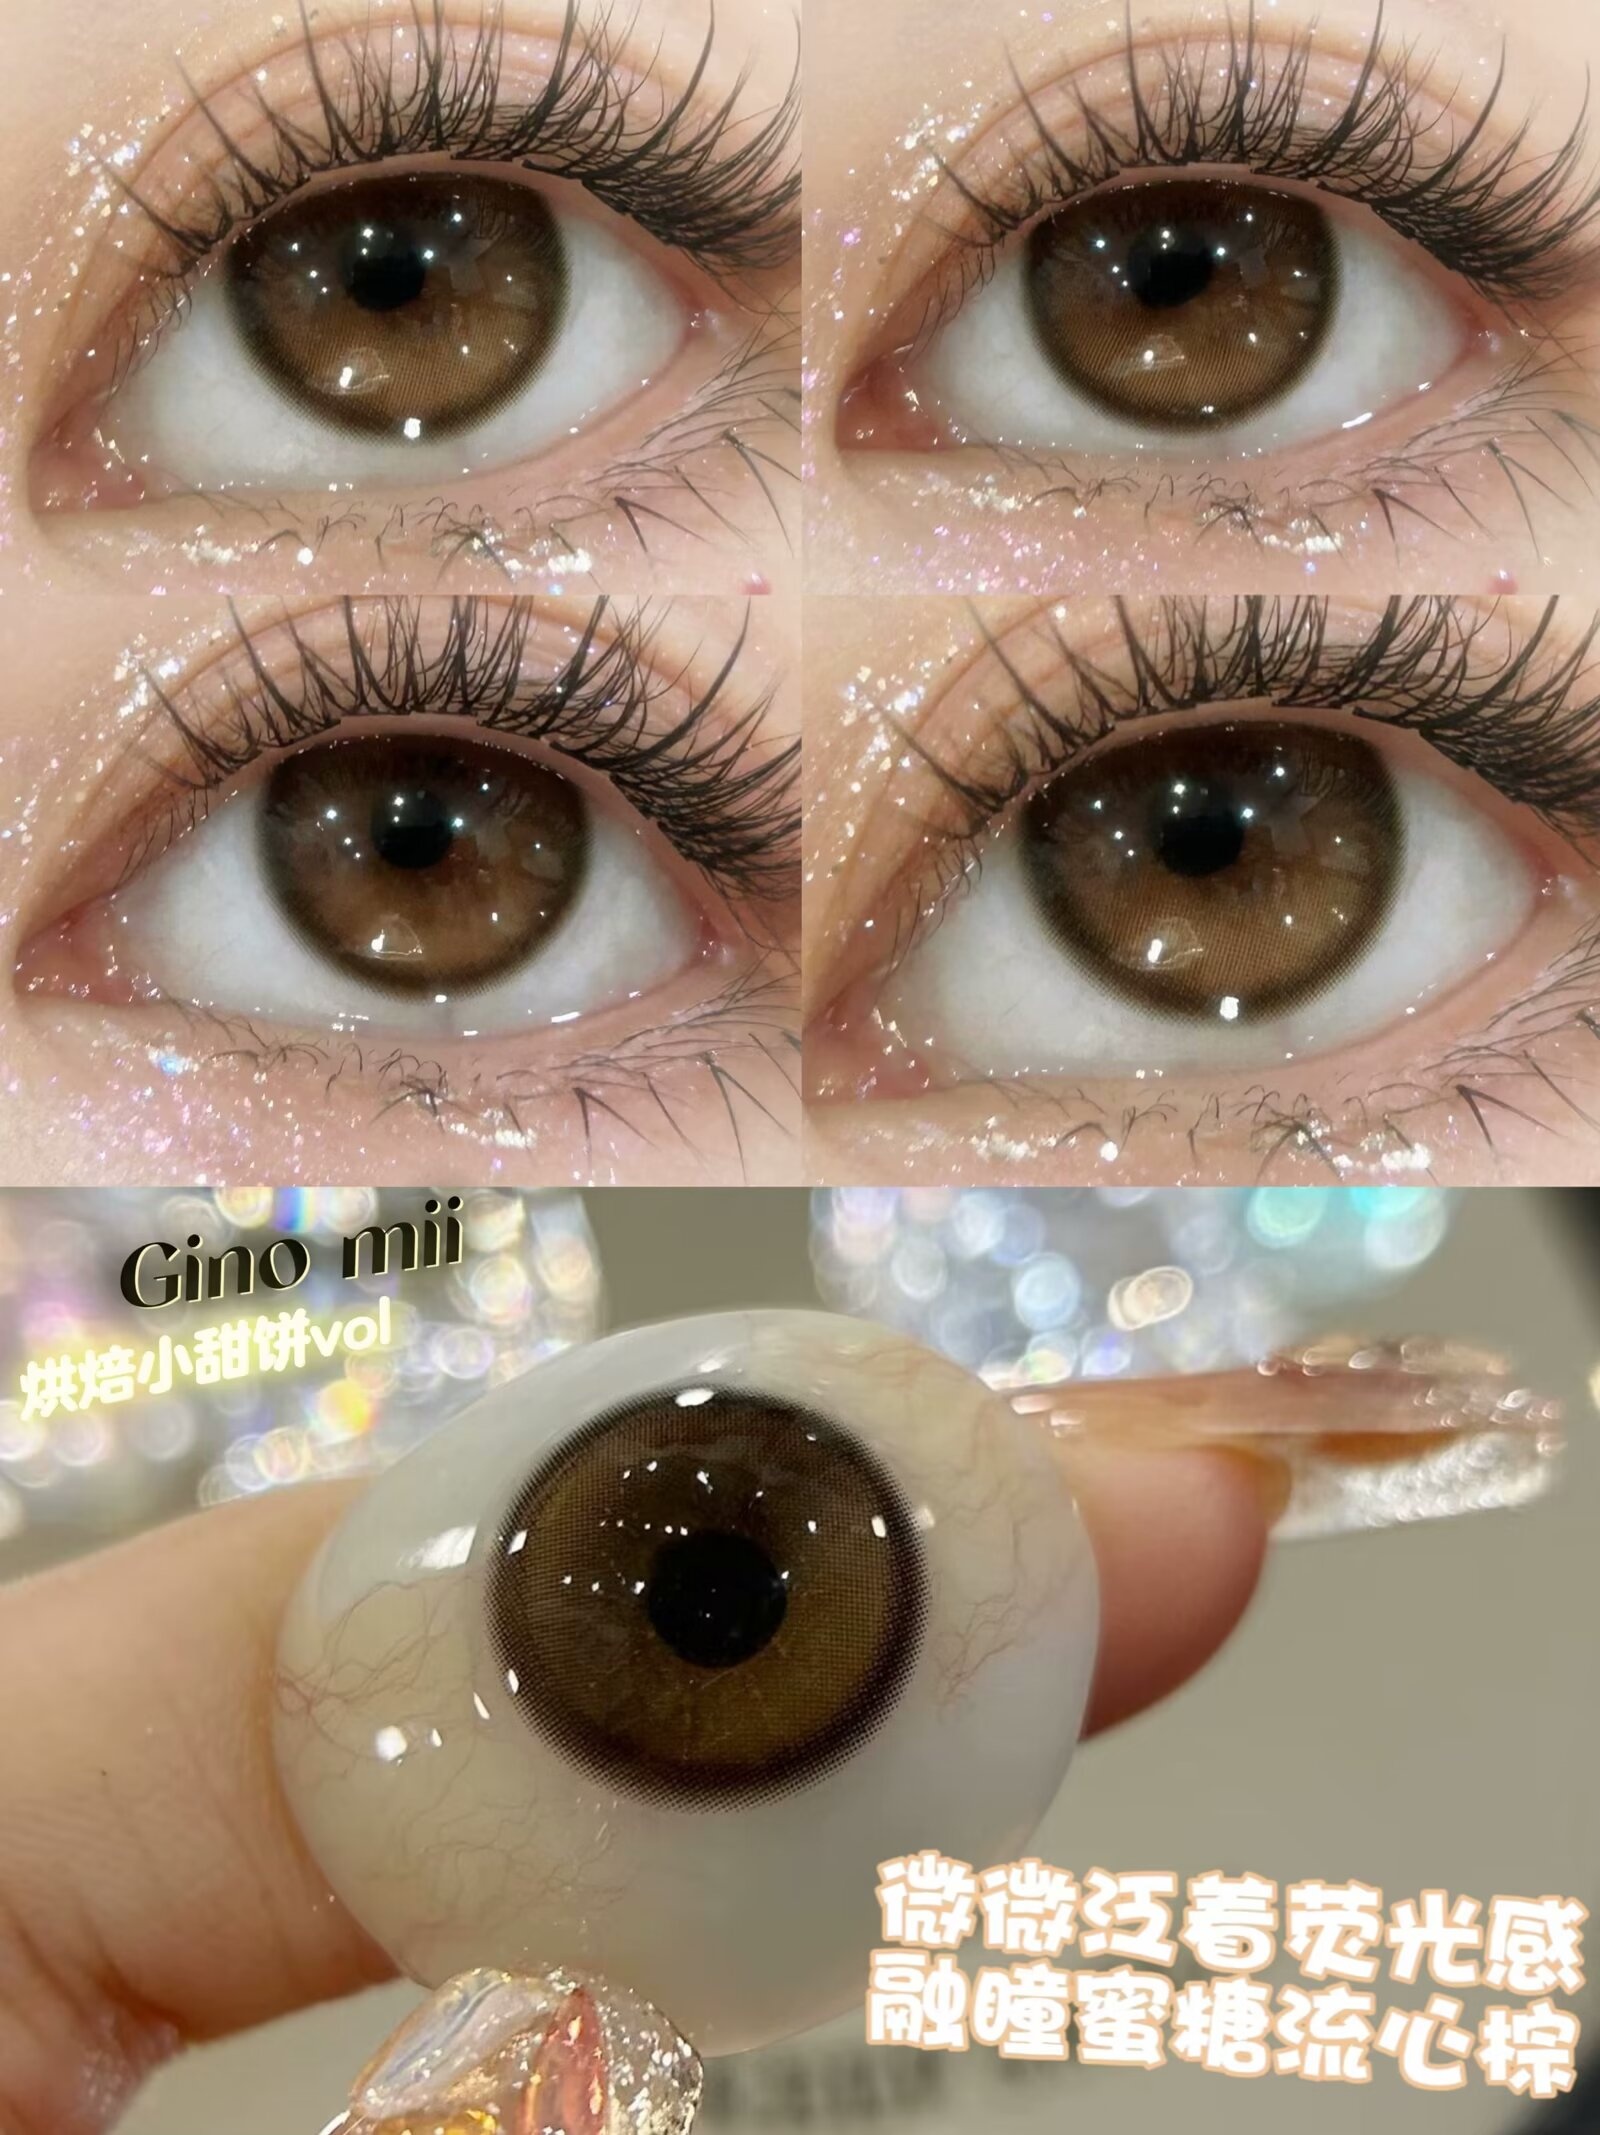 GINOMII 蜂蜜烧14.2mm 半年抛彩色隐形眼镜 1副/2片 左右眼度数可不同 - VVCON美瞳网